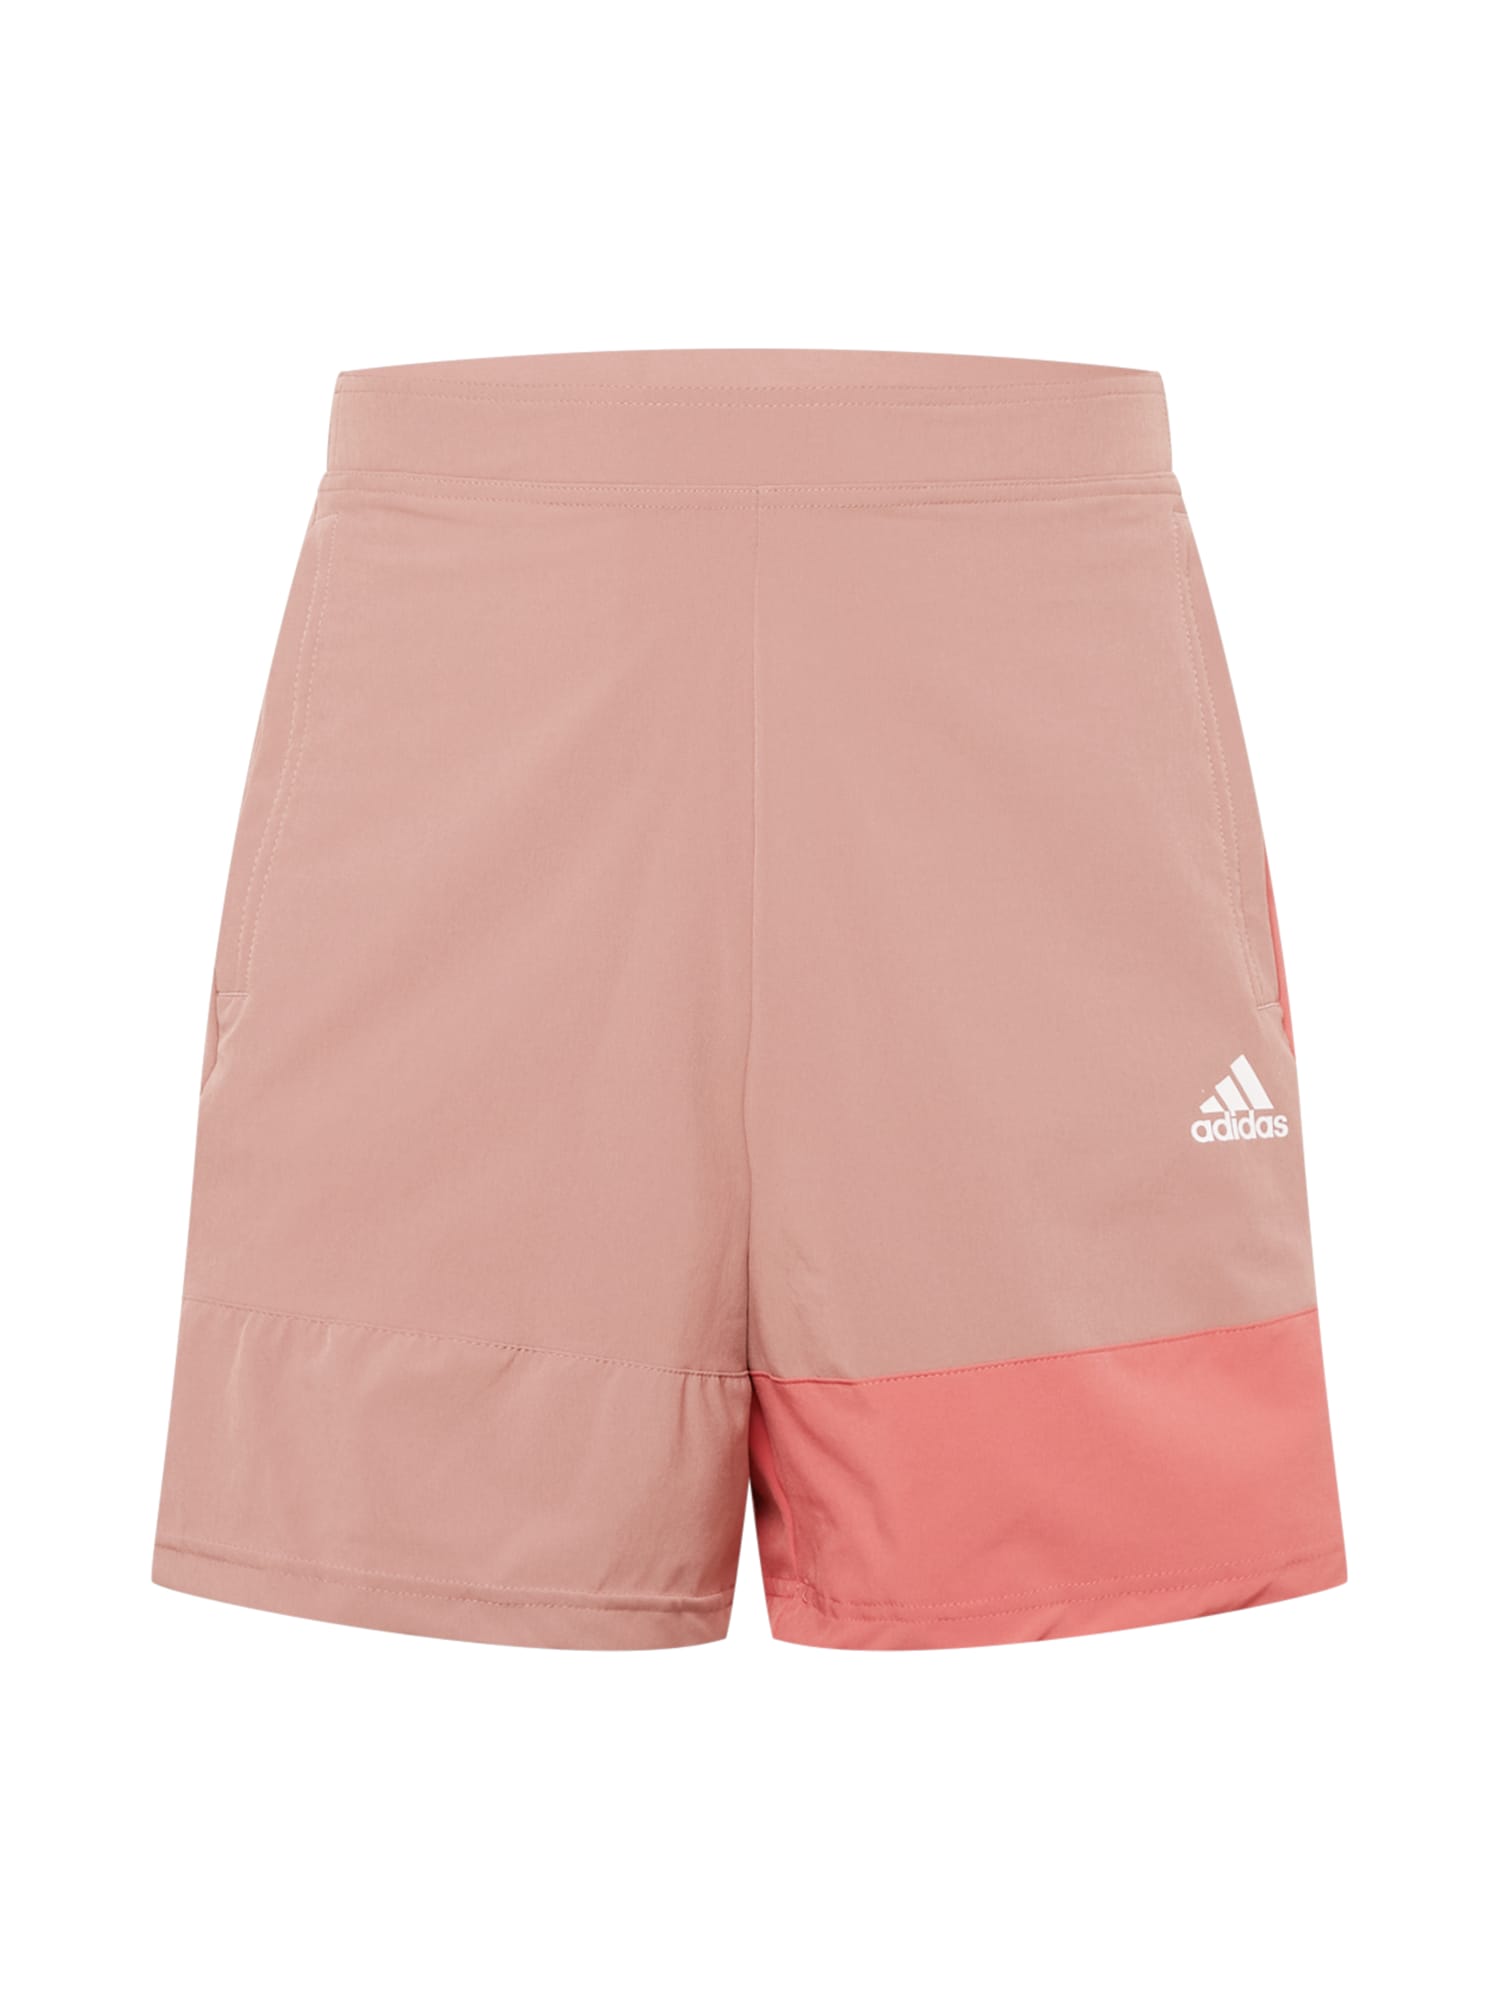 ADIDAS PERFORMANCE Športne hlače  kapučino / svetlo roza / bela